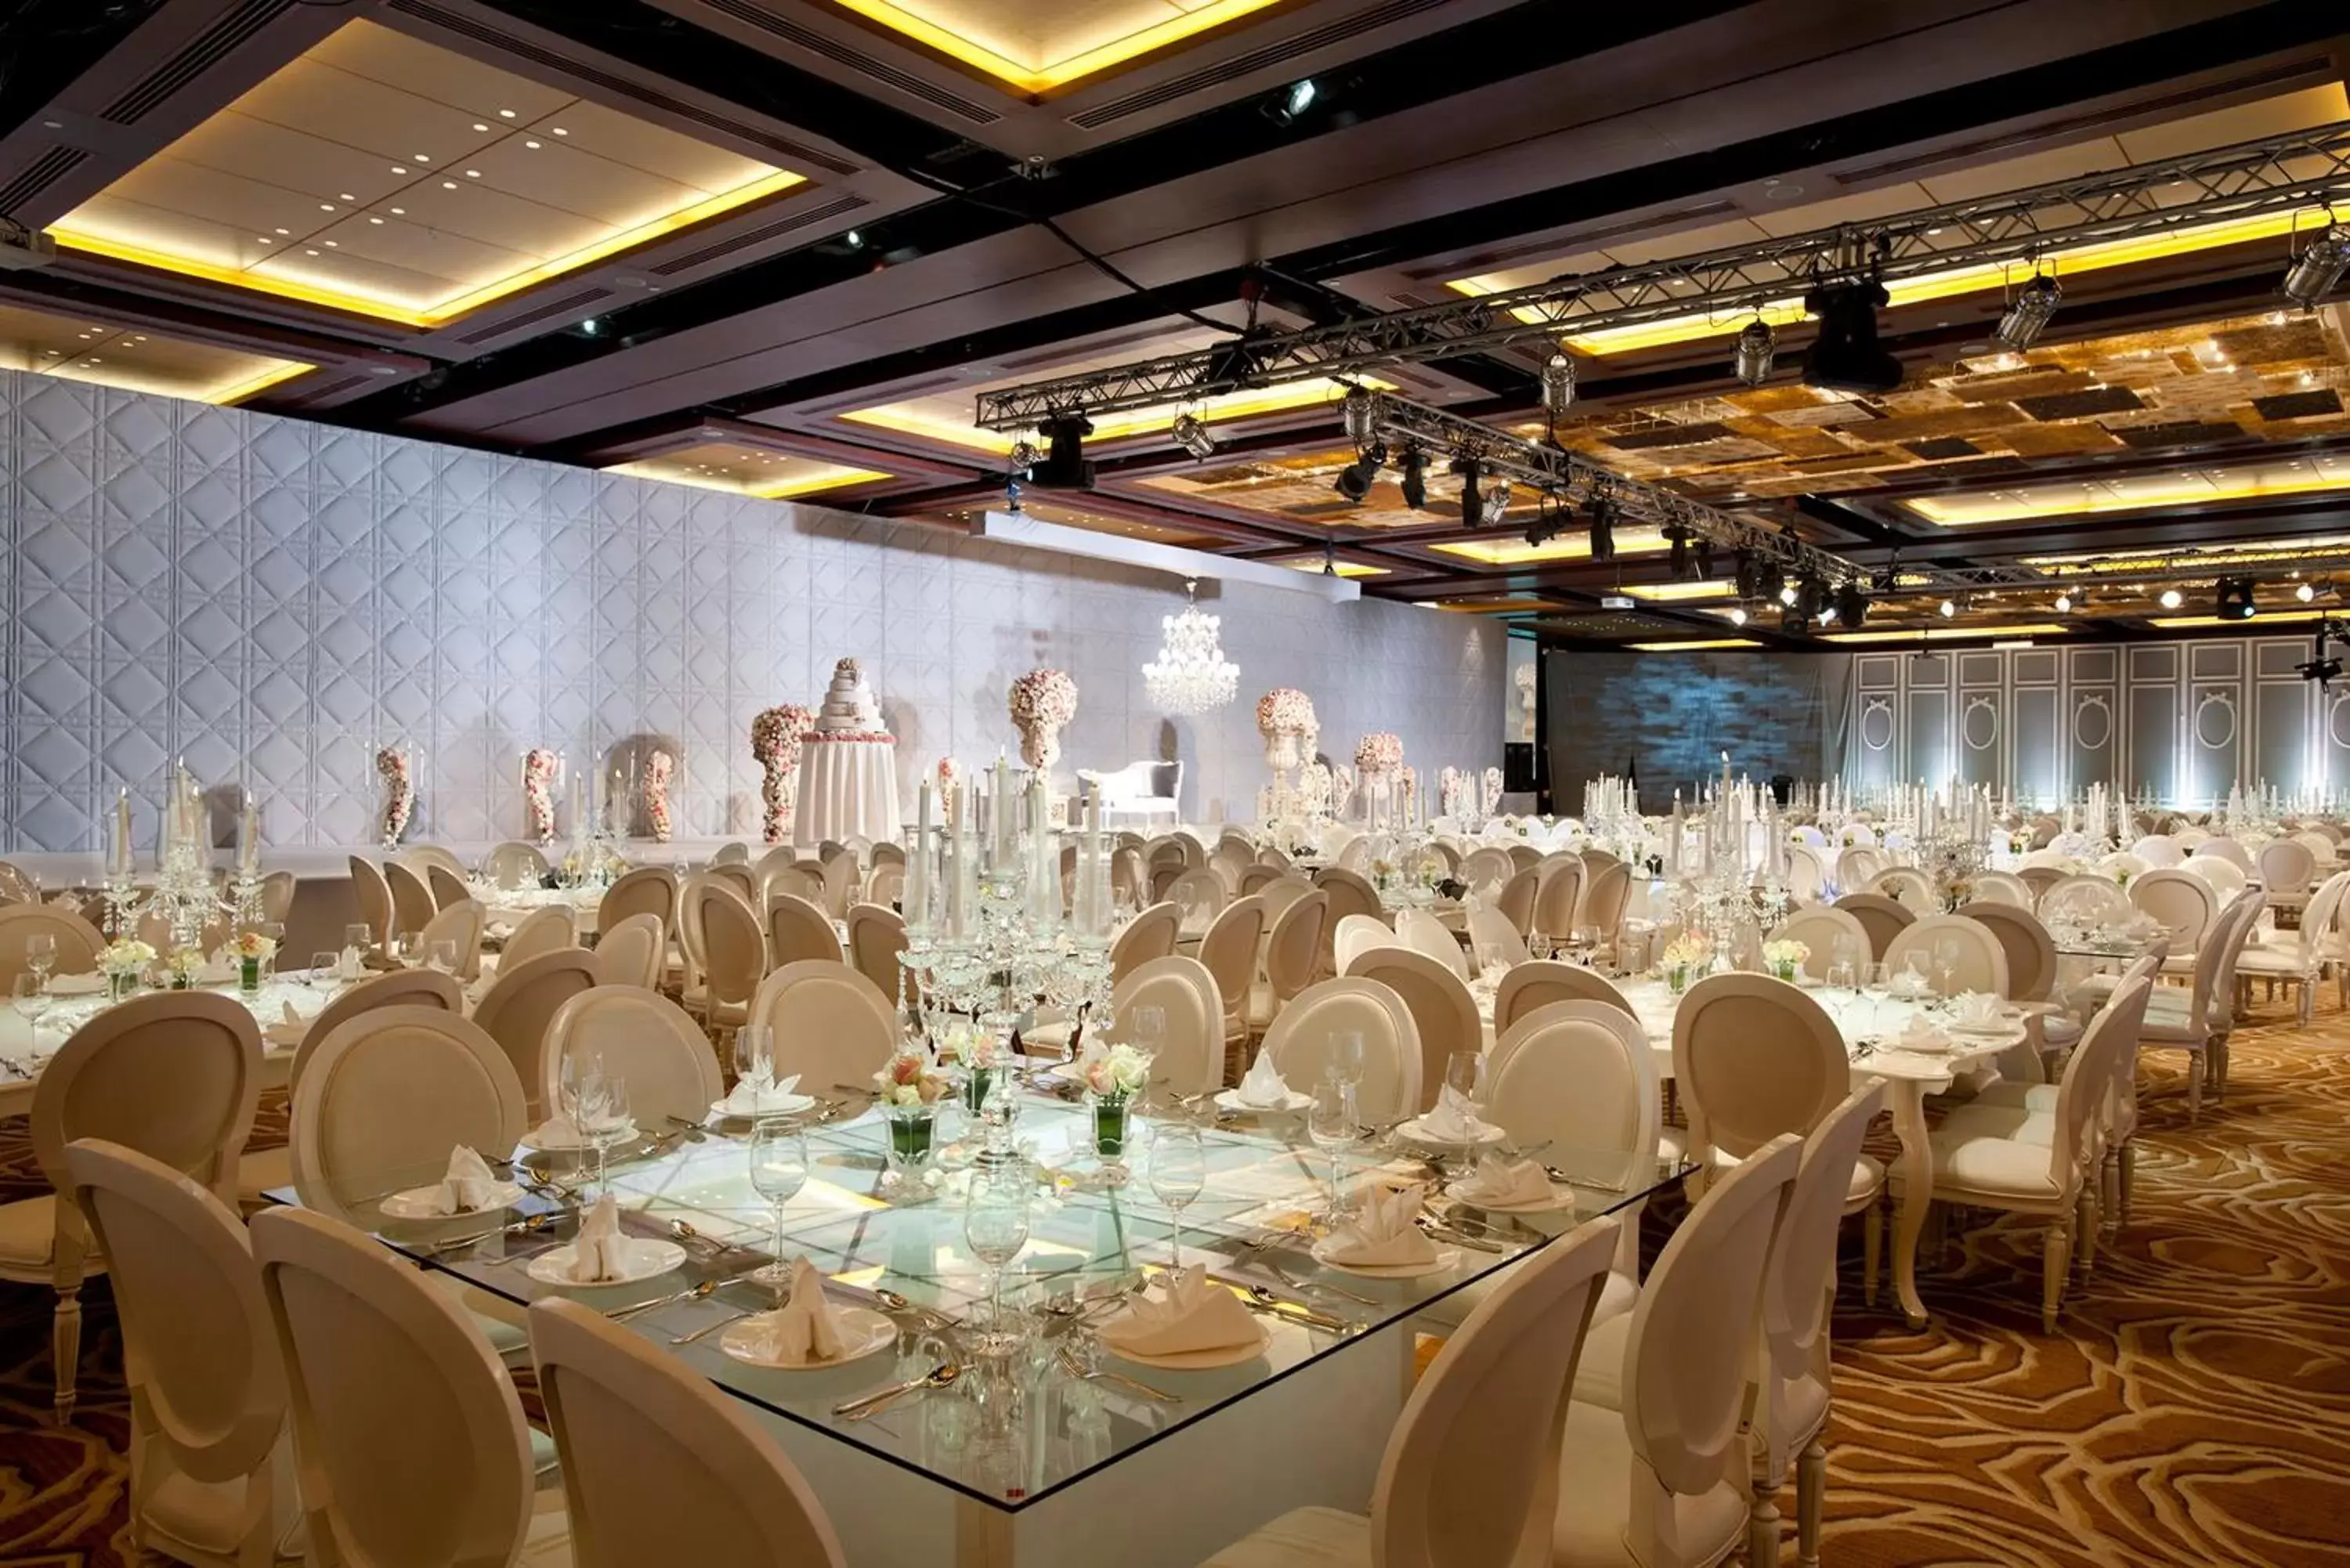 Banquet/Function facilities, Banquet Facilities in Crowne Plaza Dubai Festival City